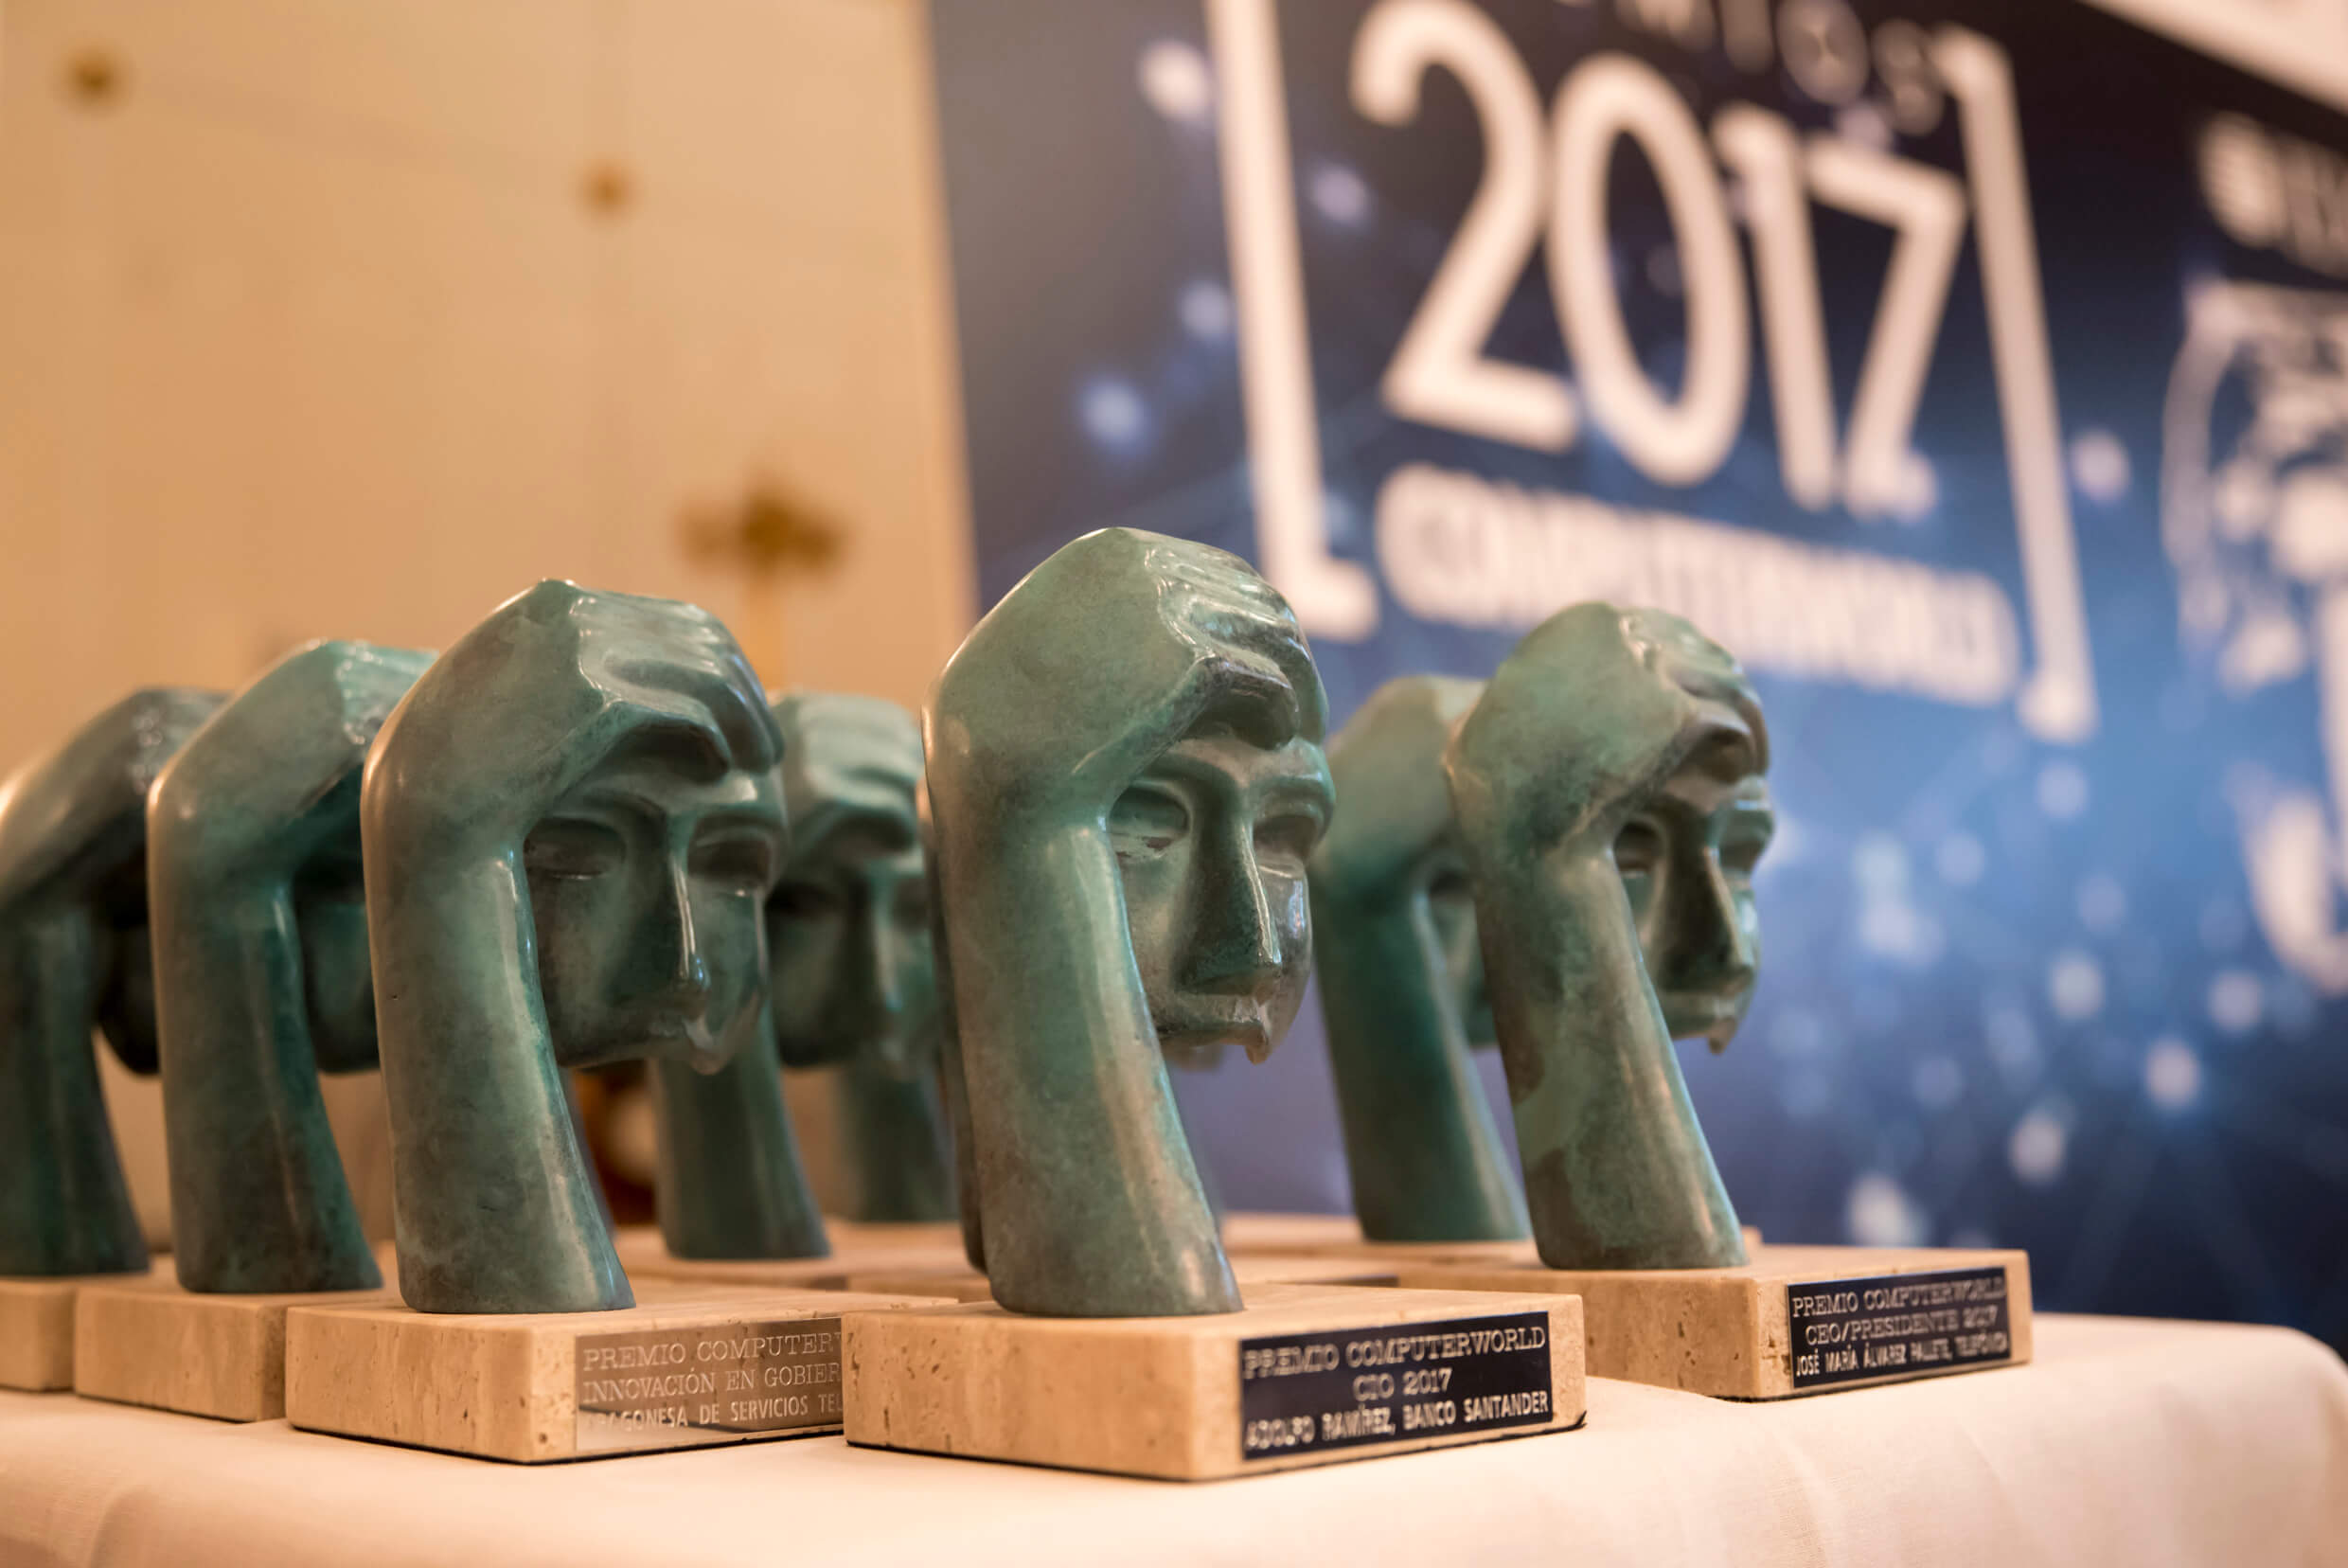 Premios_ComputerWorld _2017_1